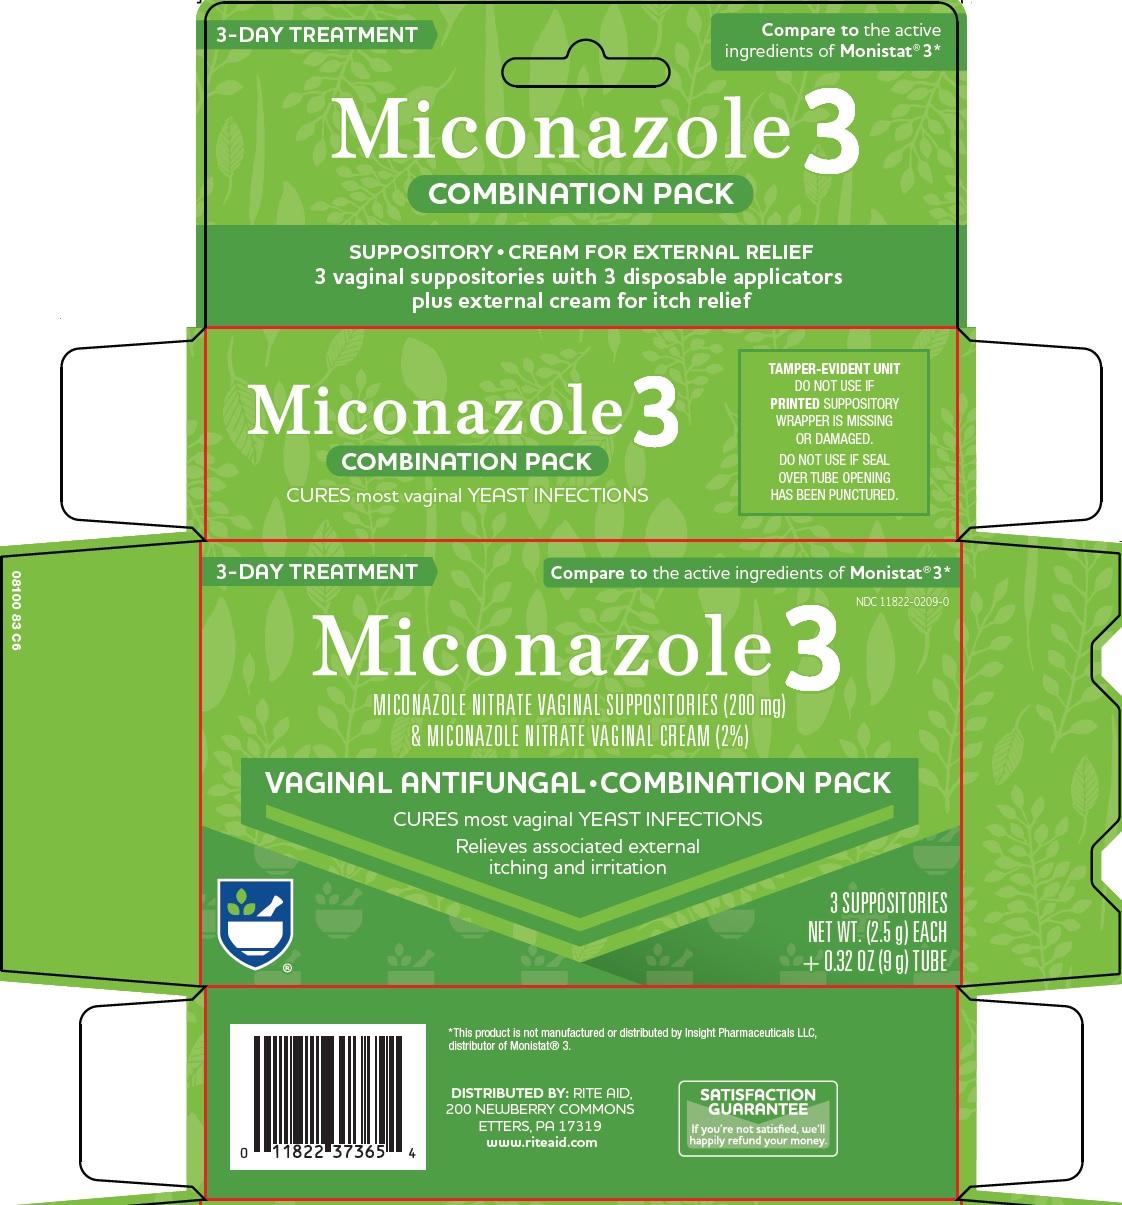 081-83-miconazole-3-1